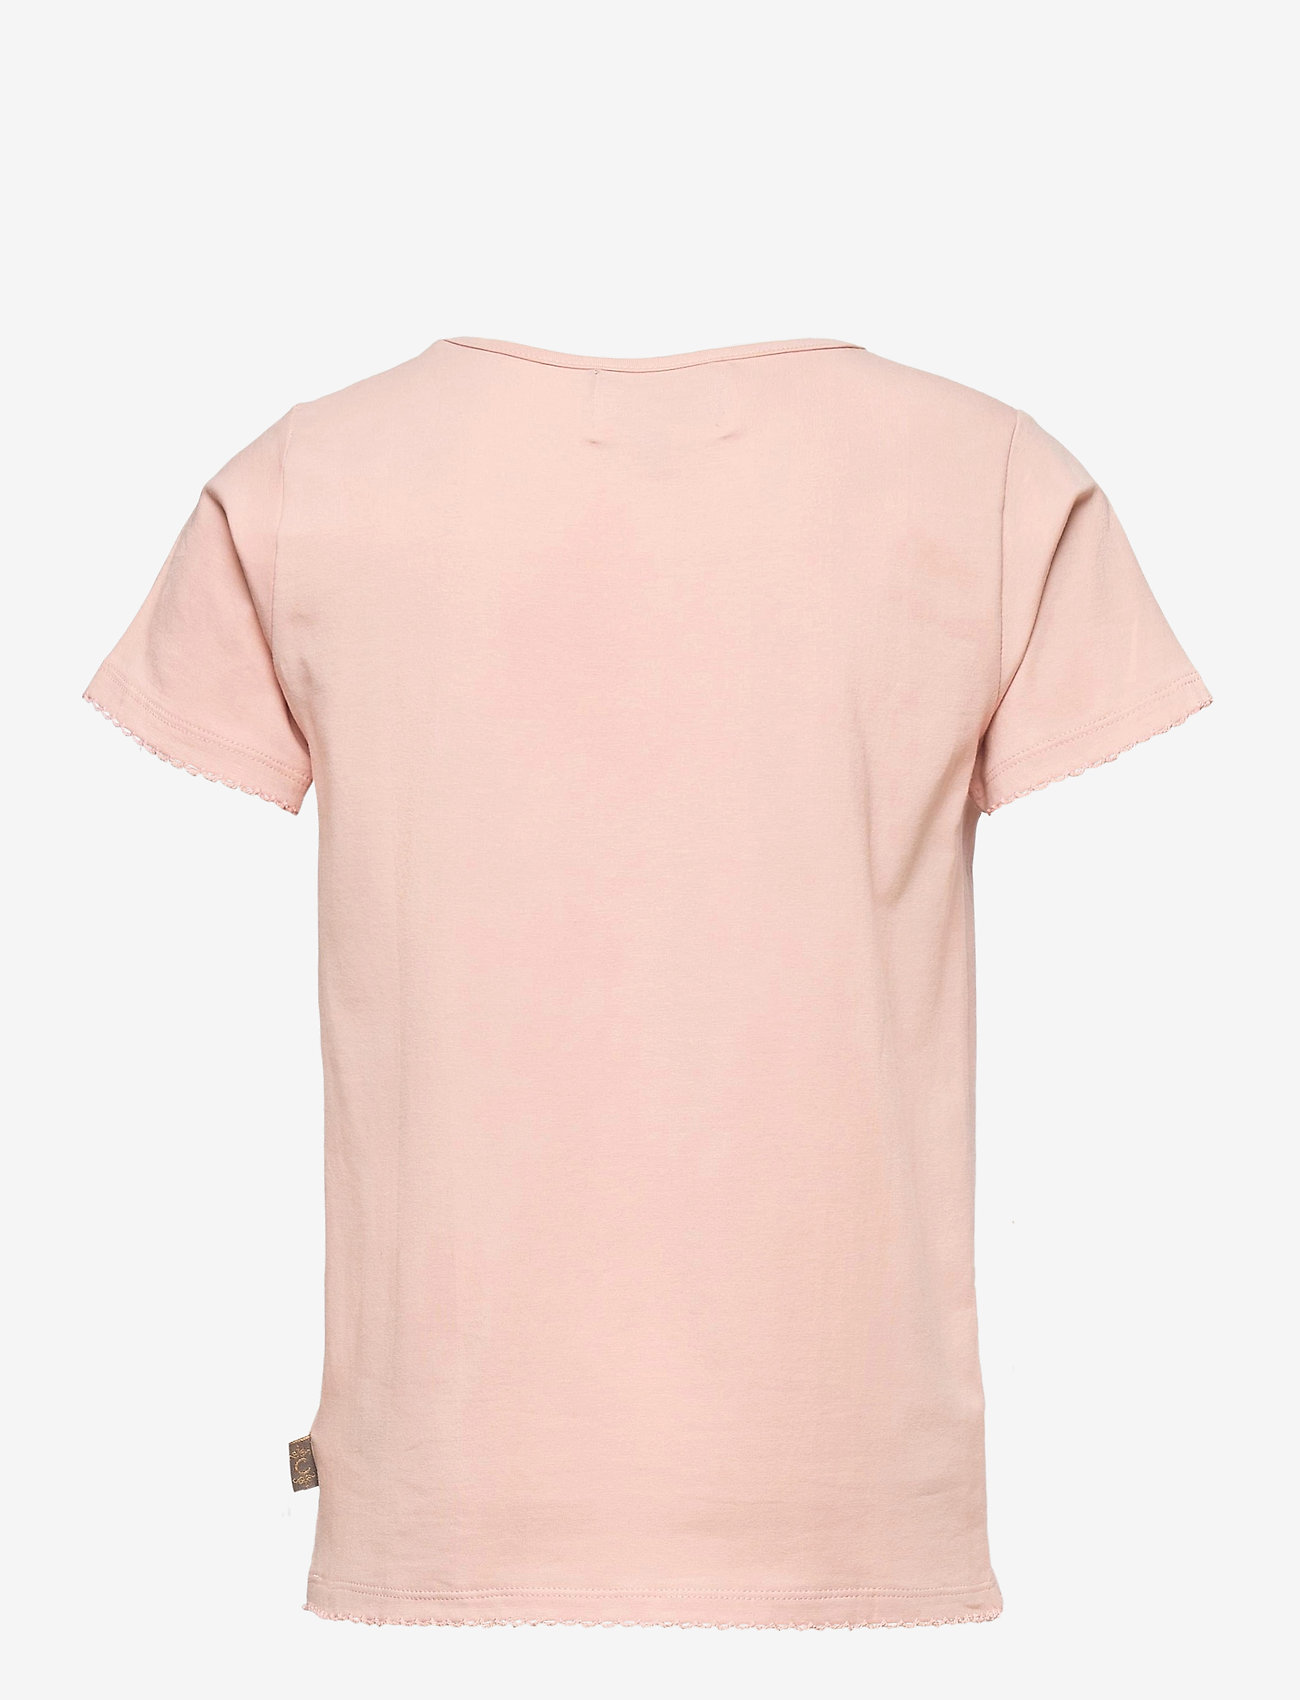 Creamie - Creamie T-shirt SS - kurzärmelige - rose smoke - 1